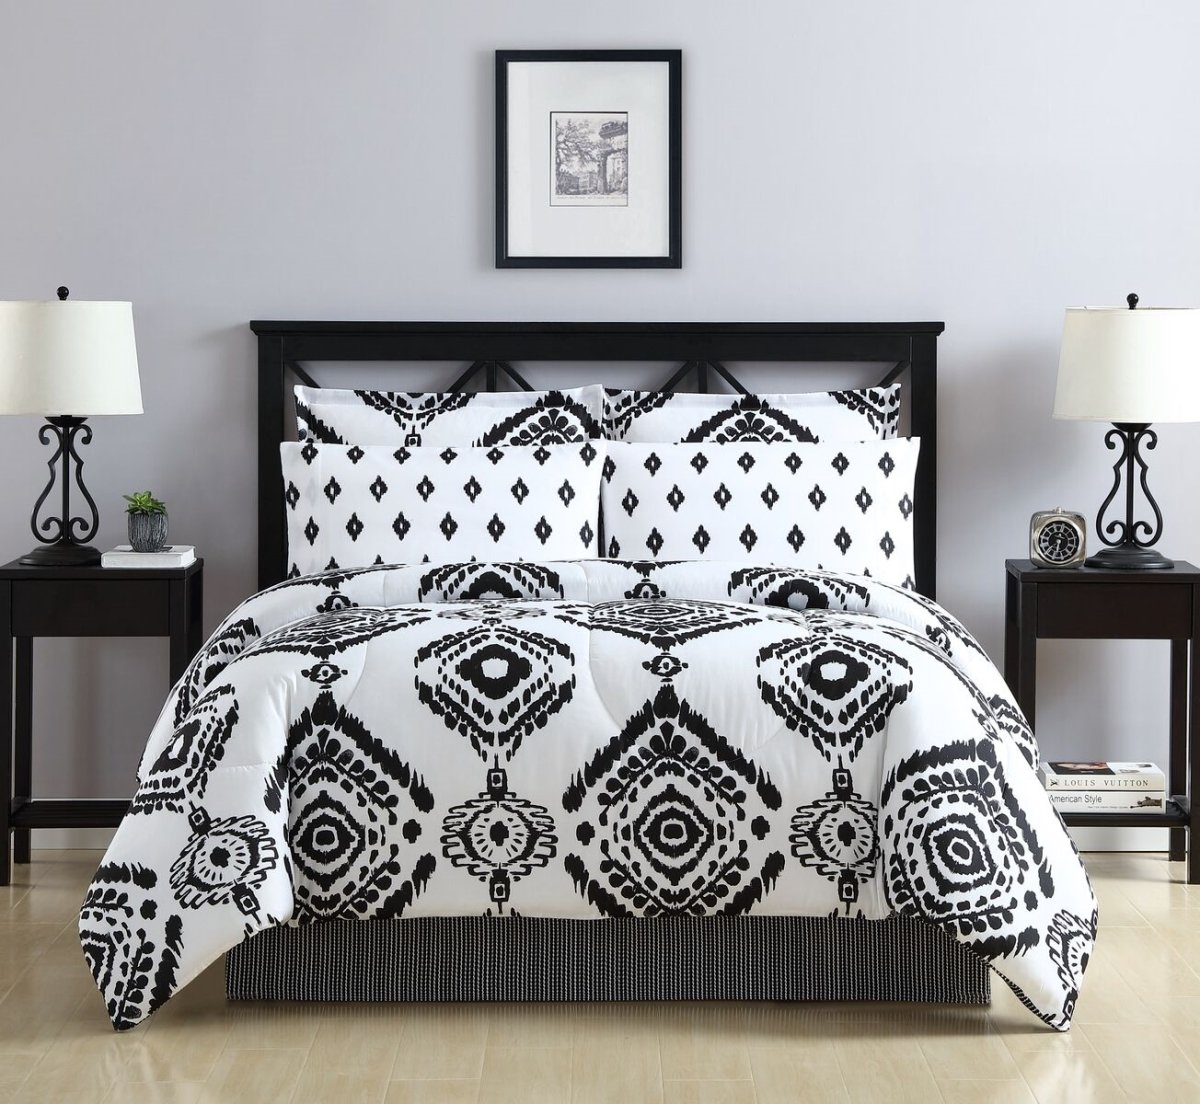 19341803bb-mul Navato Bed In A Bag Comforter Set, Black - Queen Size, 8 Piece